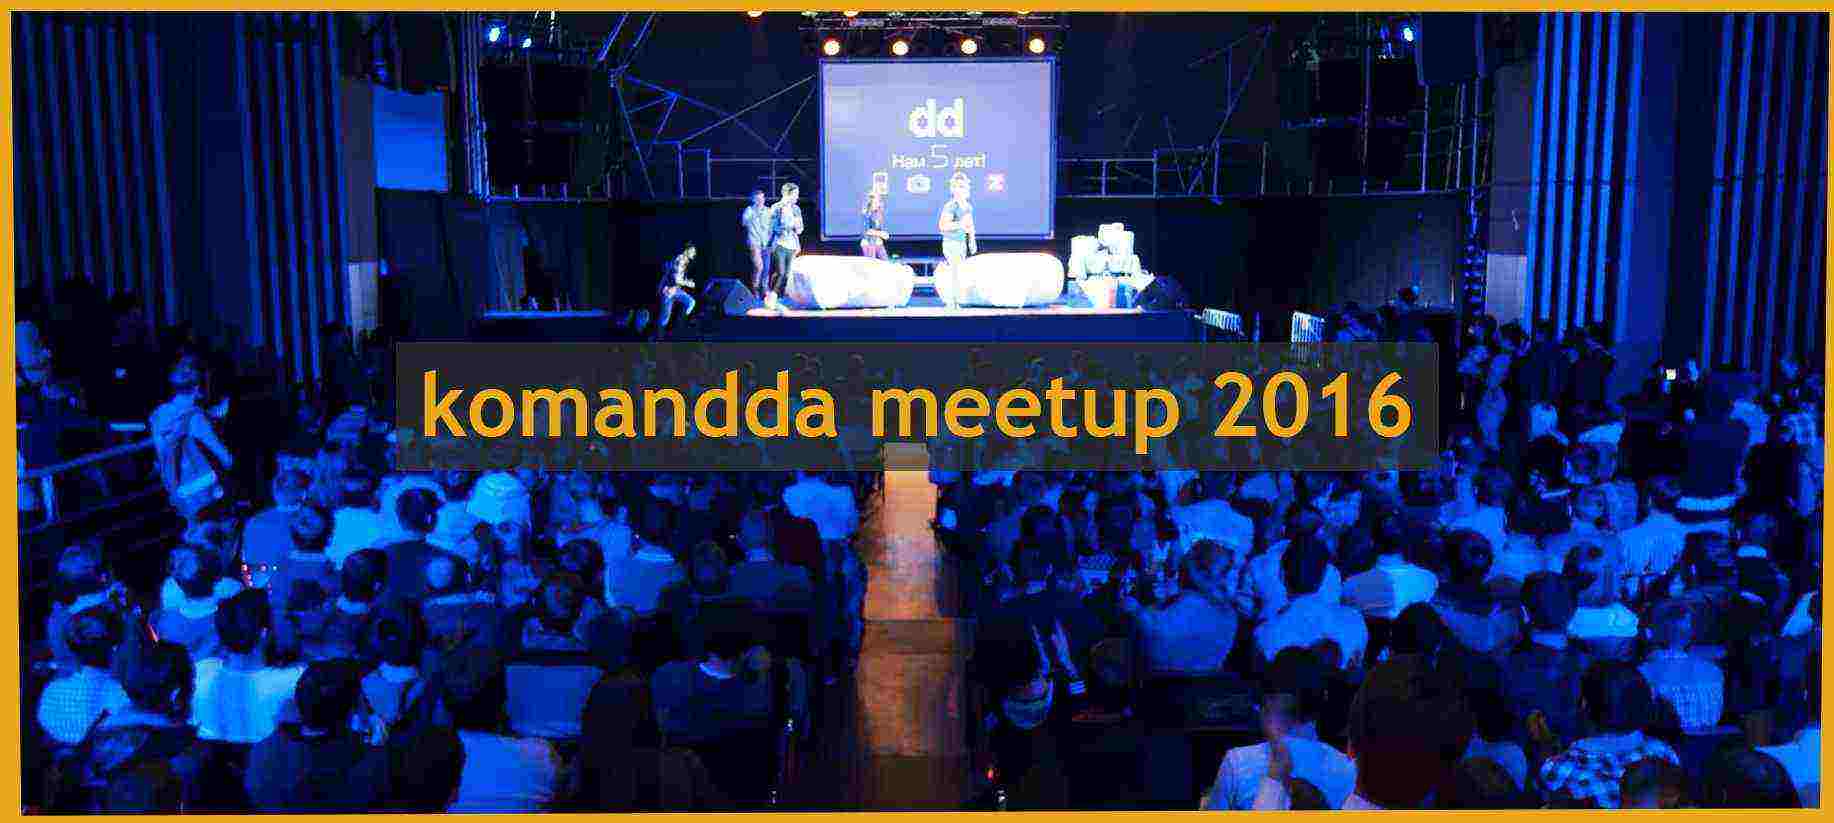 Komandda MeetUp 2016!